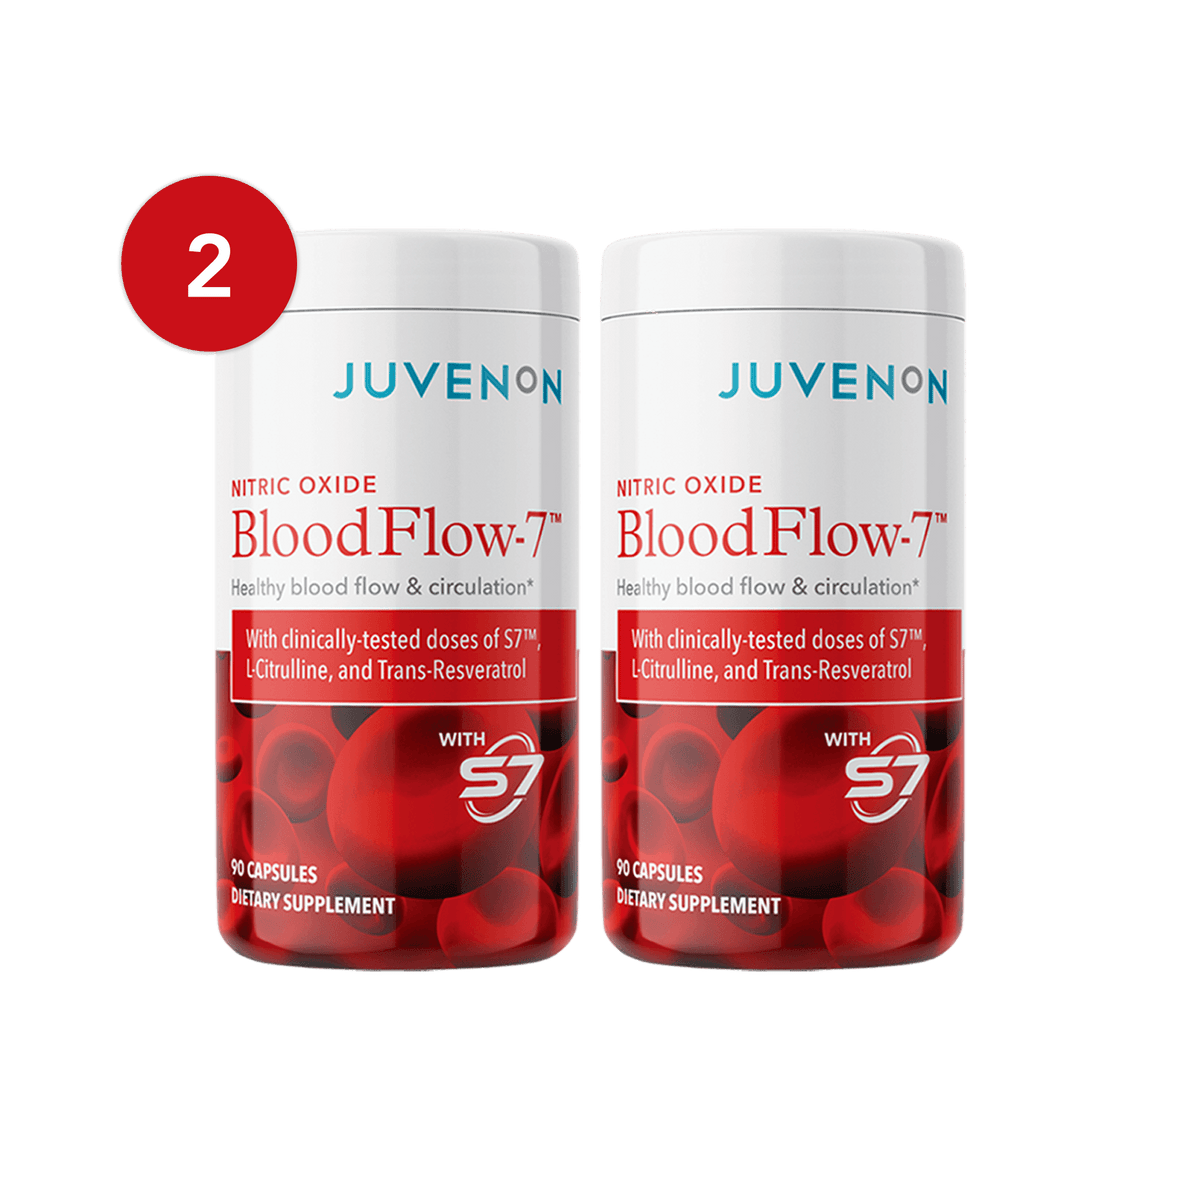 BloodFlow-7® Nerve and Leg Pain